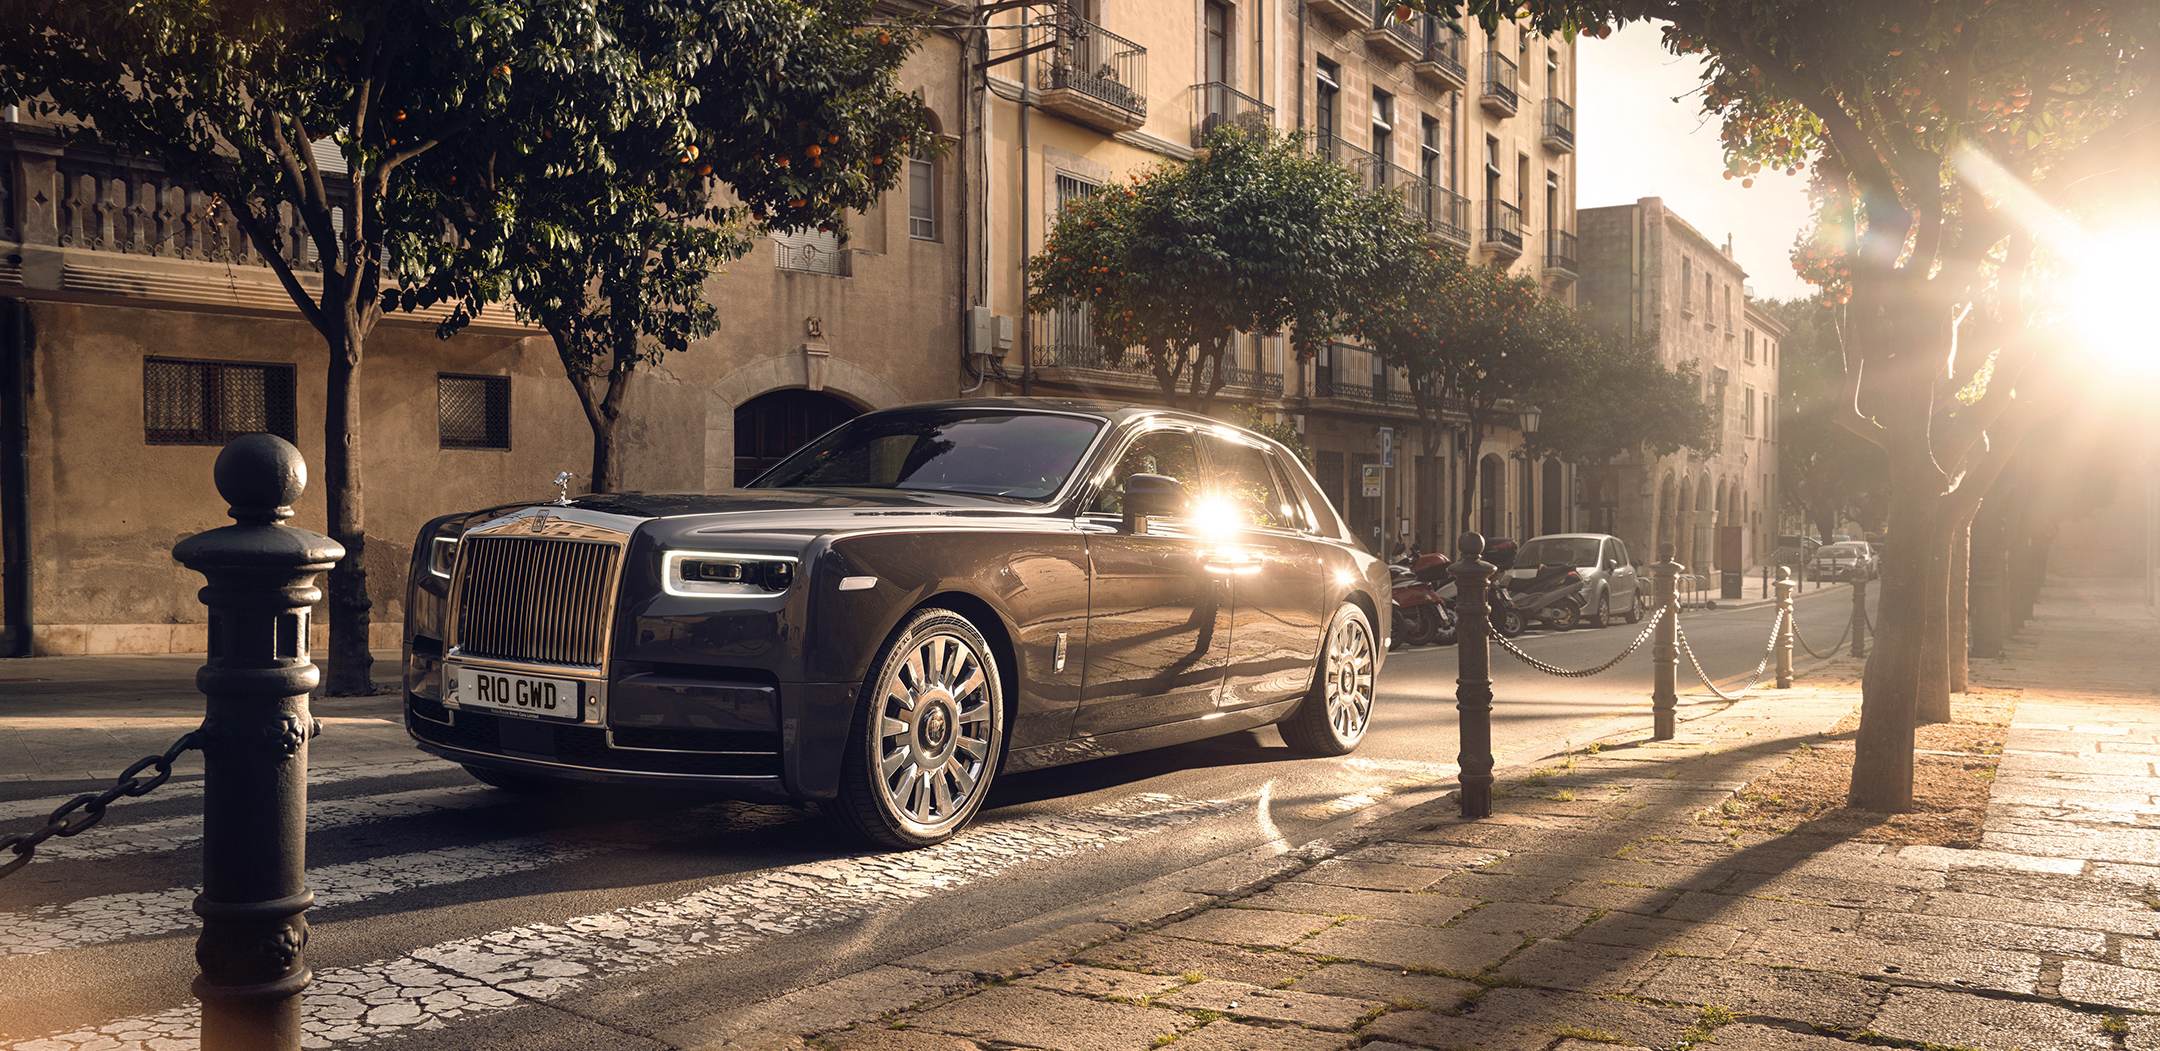 2018 Rolls Royce Phantom 4K 2 Wallpaper  HD Car Wallpapers 8756